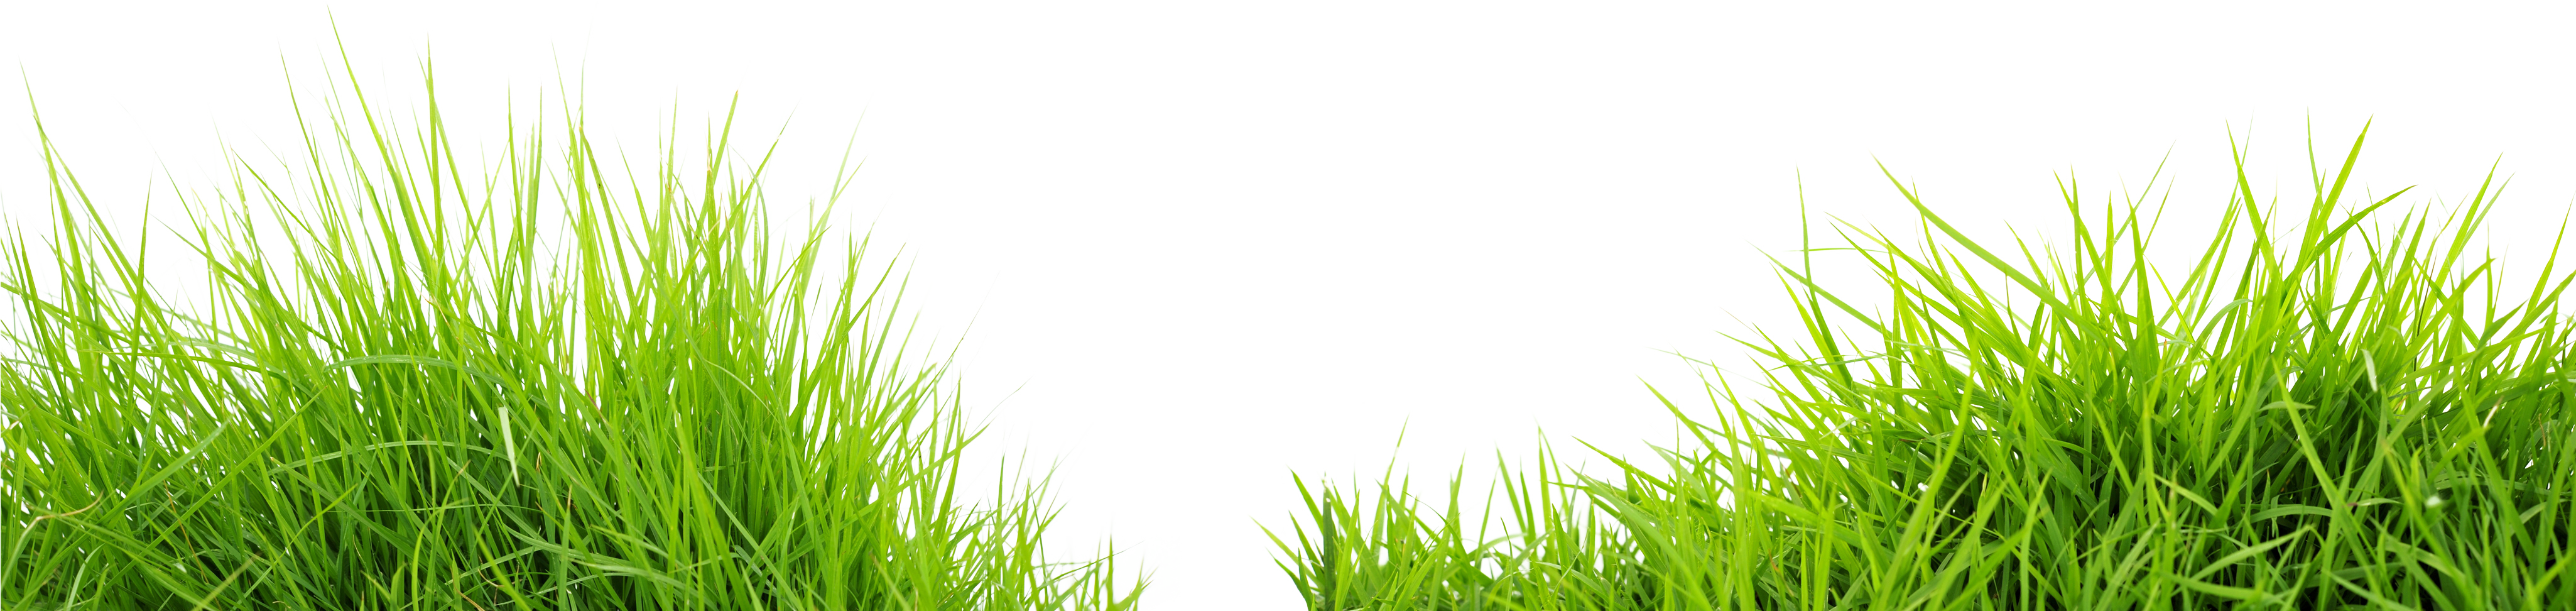 Grass clipart grassland. Png image purepng free